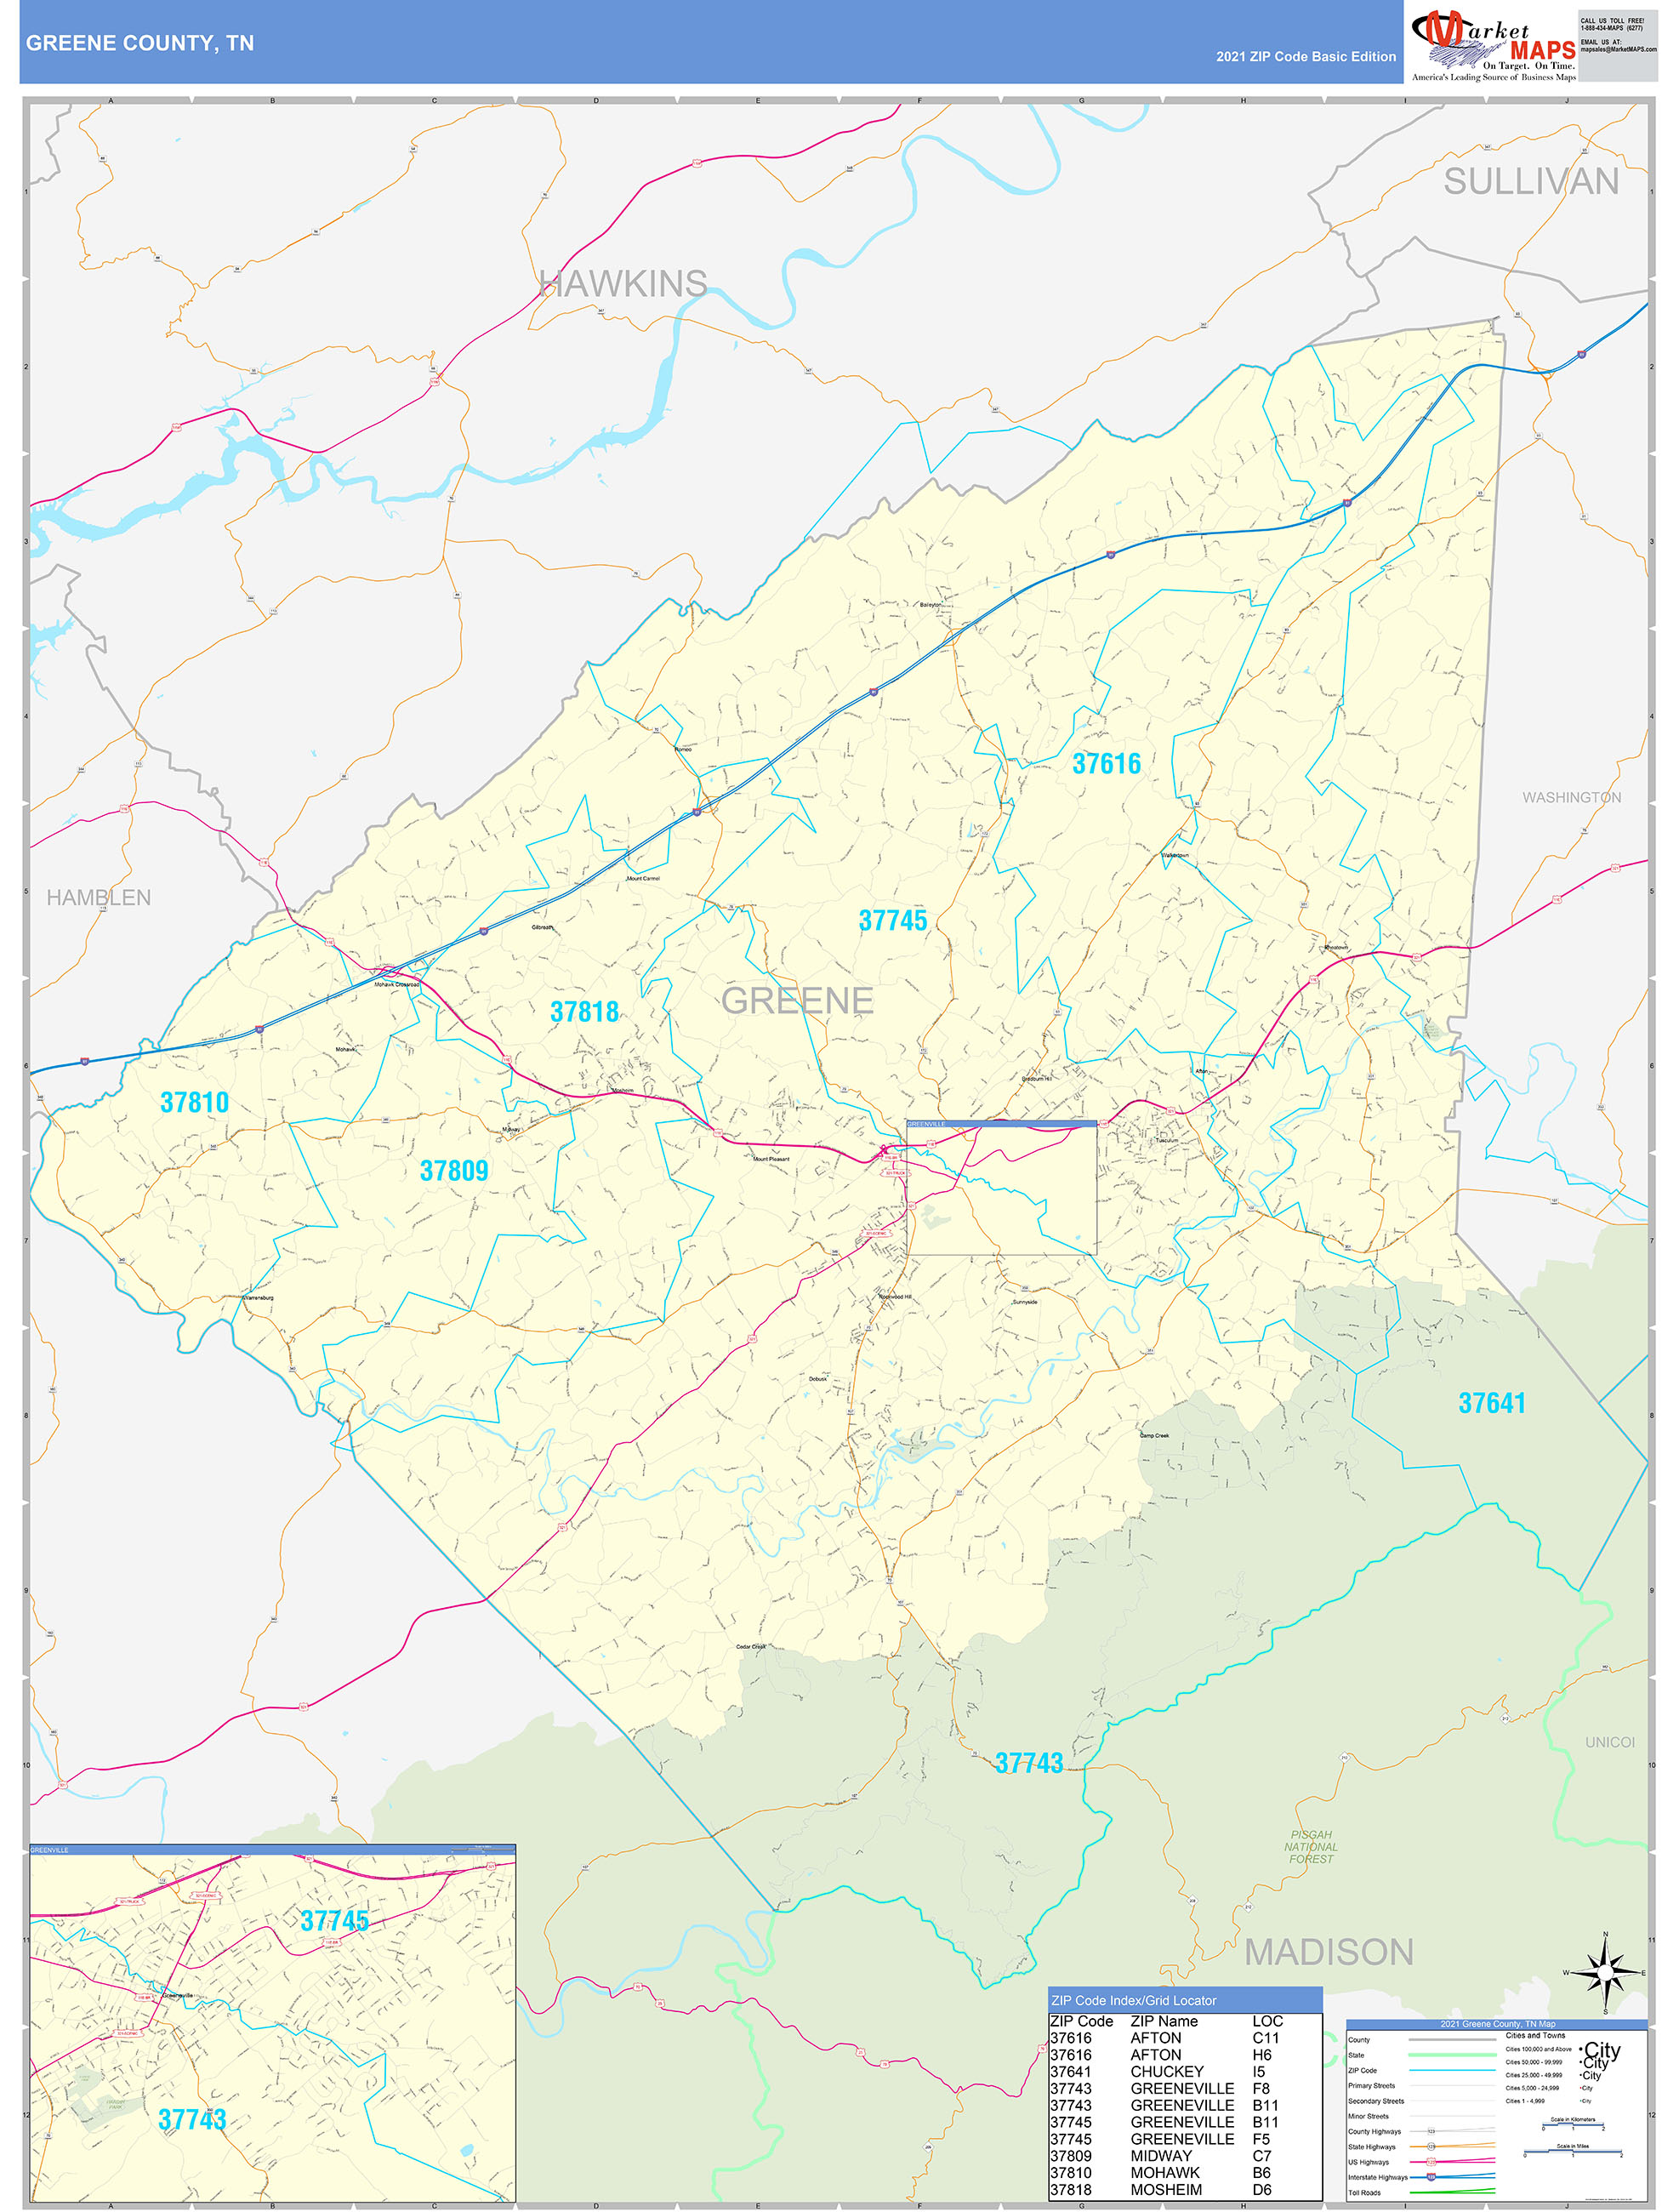 Greene County, TN Zip Code Wall Map Basic Style by MarketMAPS MapSales